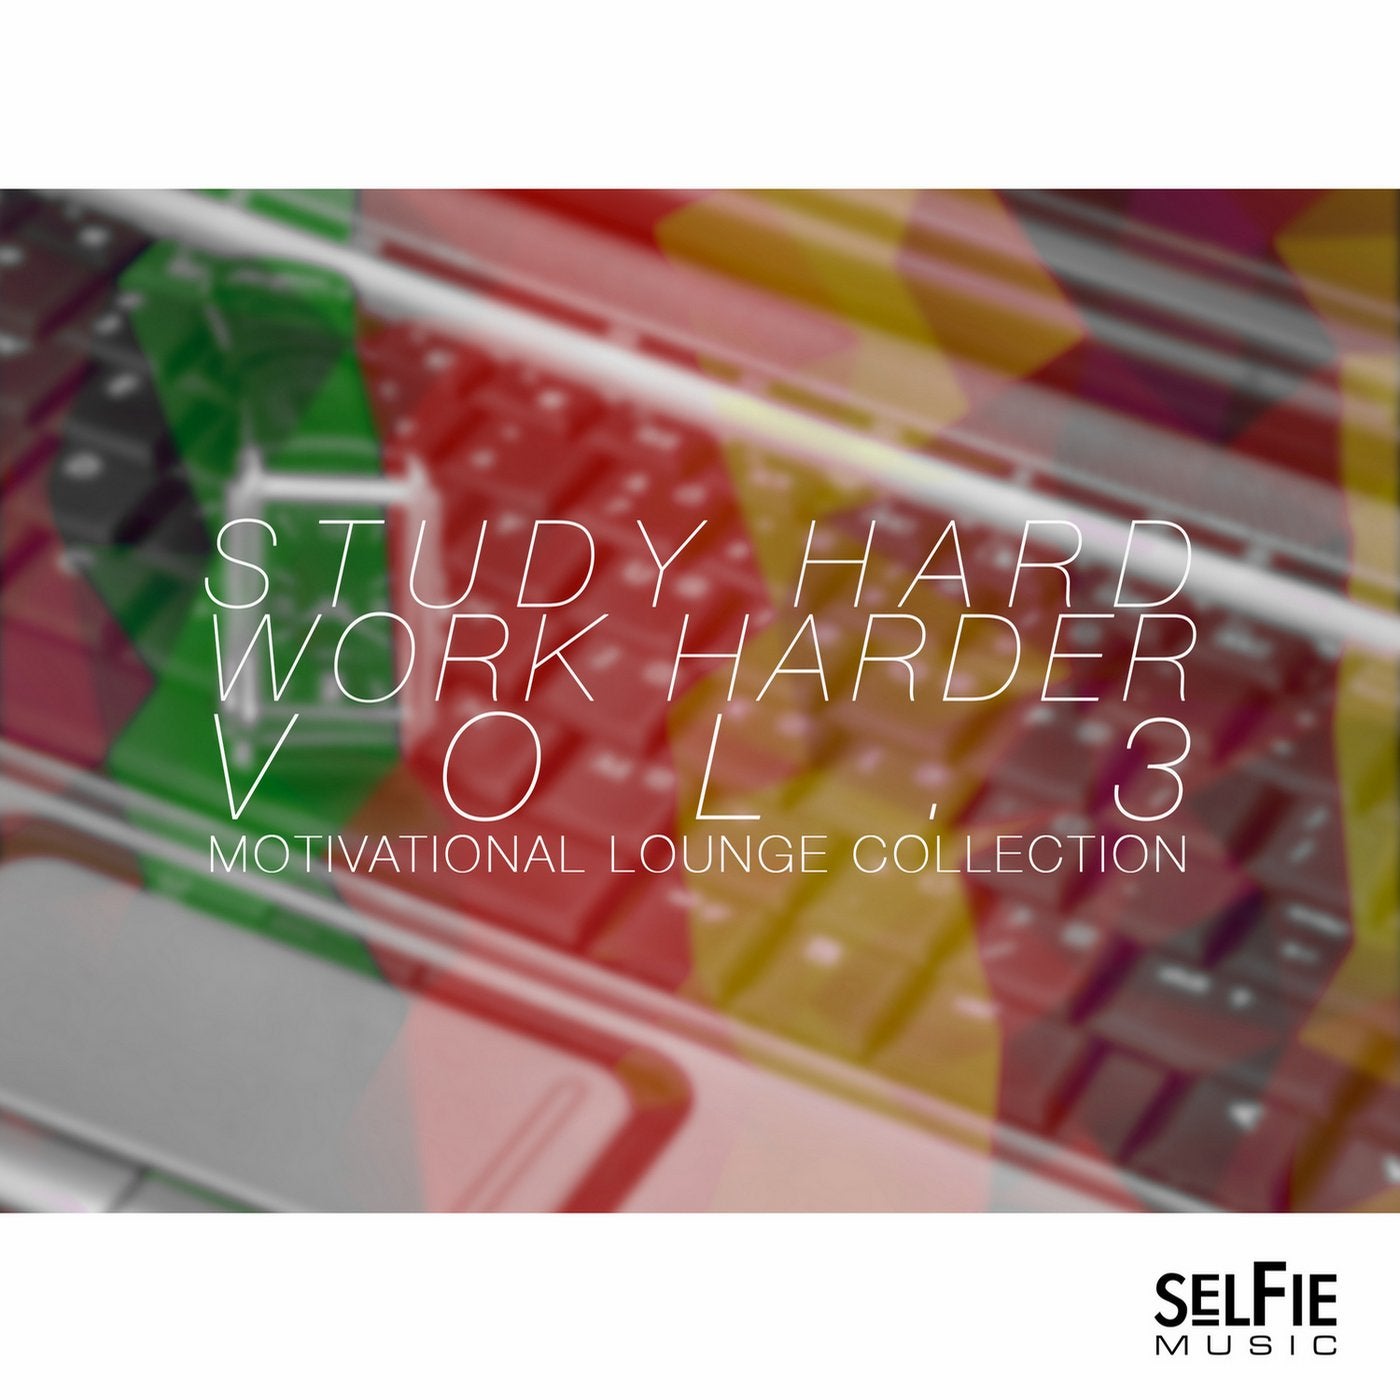 Study Hard, Work Harder Vol.3 - Motivational Lounge Collection